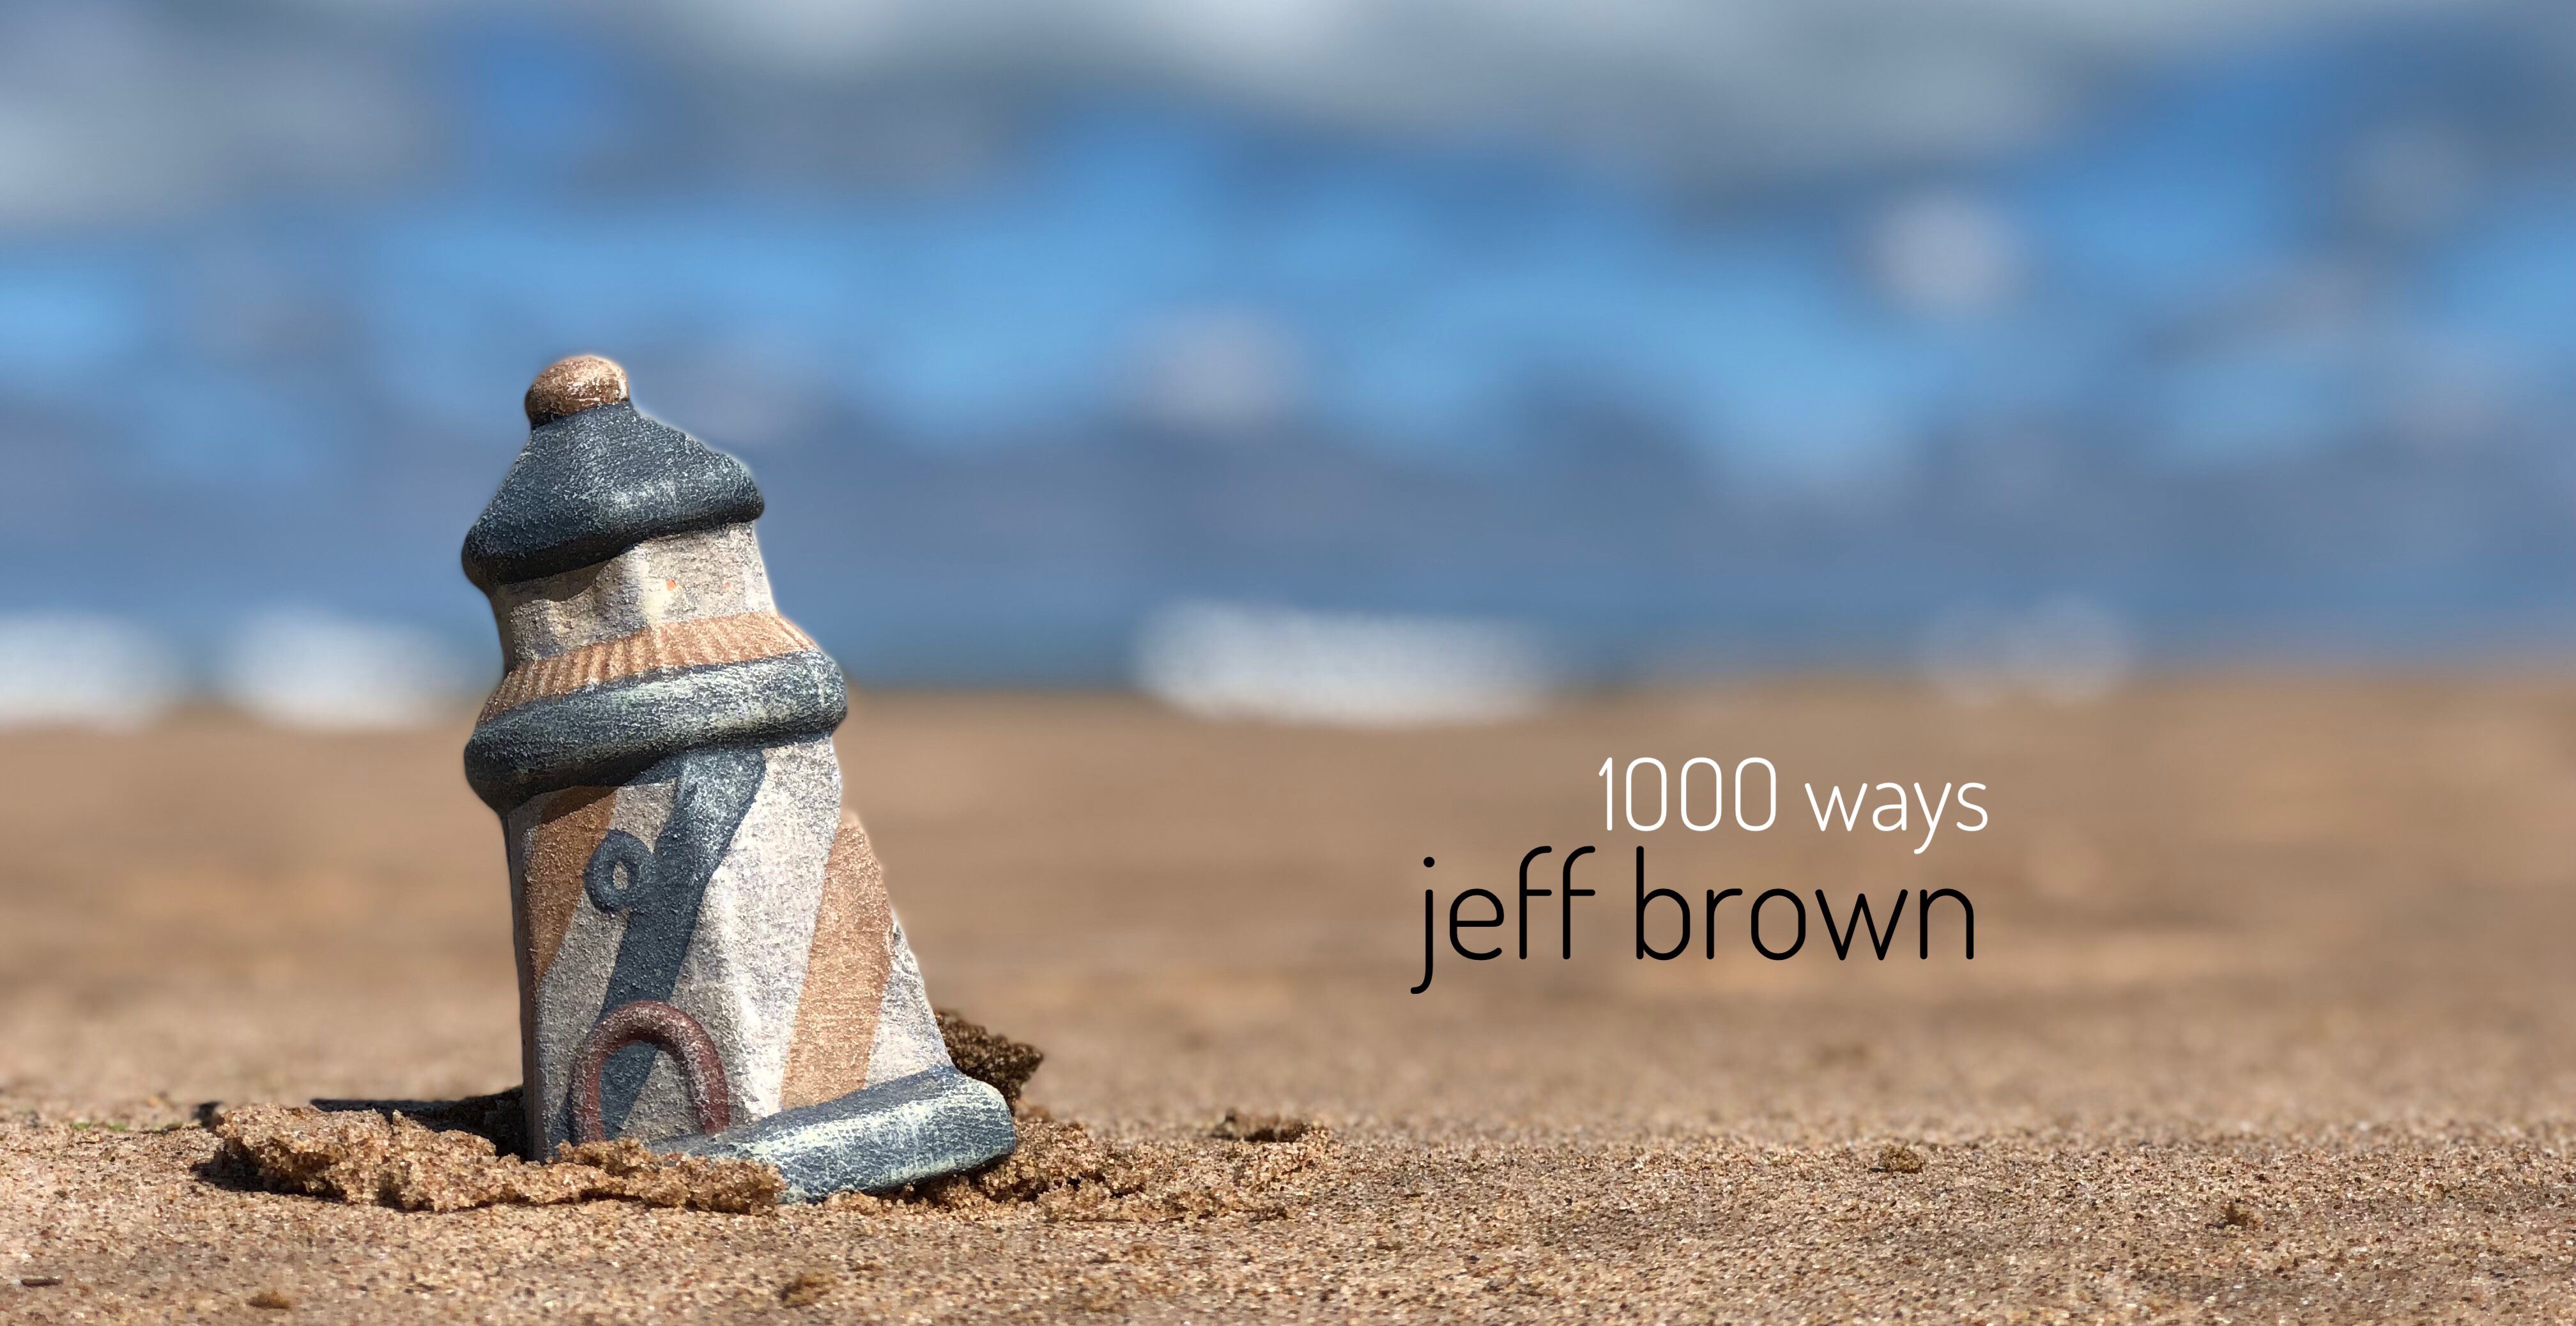 Jeff Brown